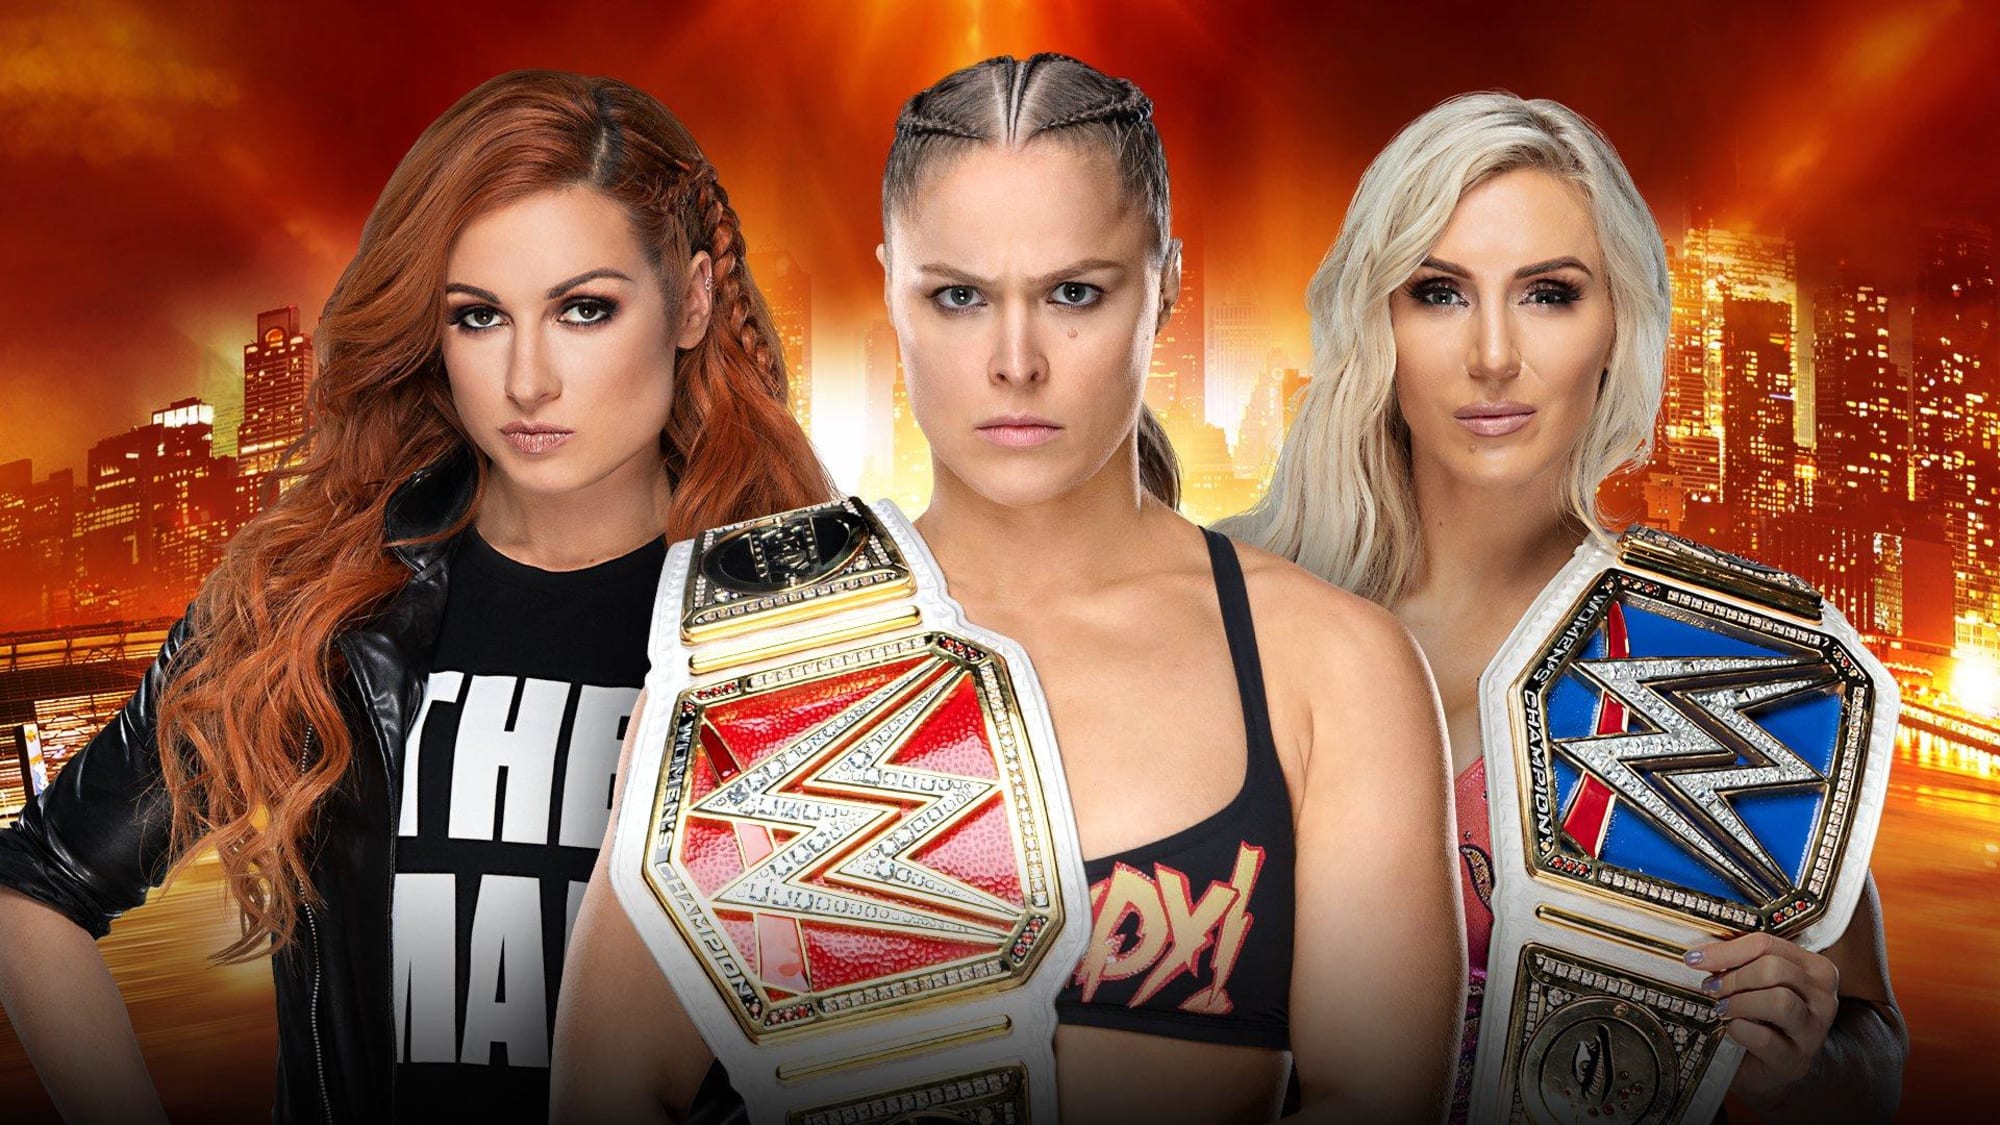 Wwe Wrestlemania 35 Preview Ronda Rousey Vs Charlotte Flair Vs Becky Lynch